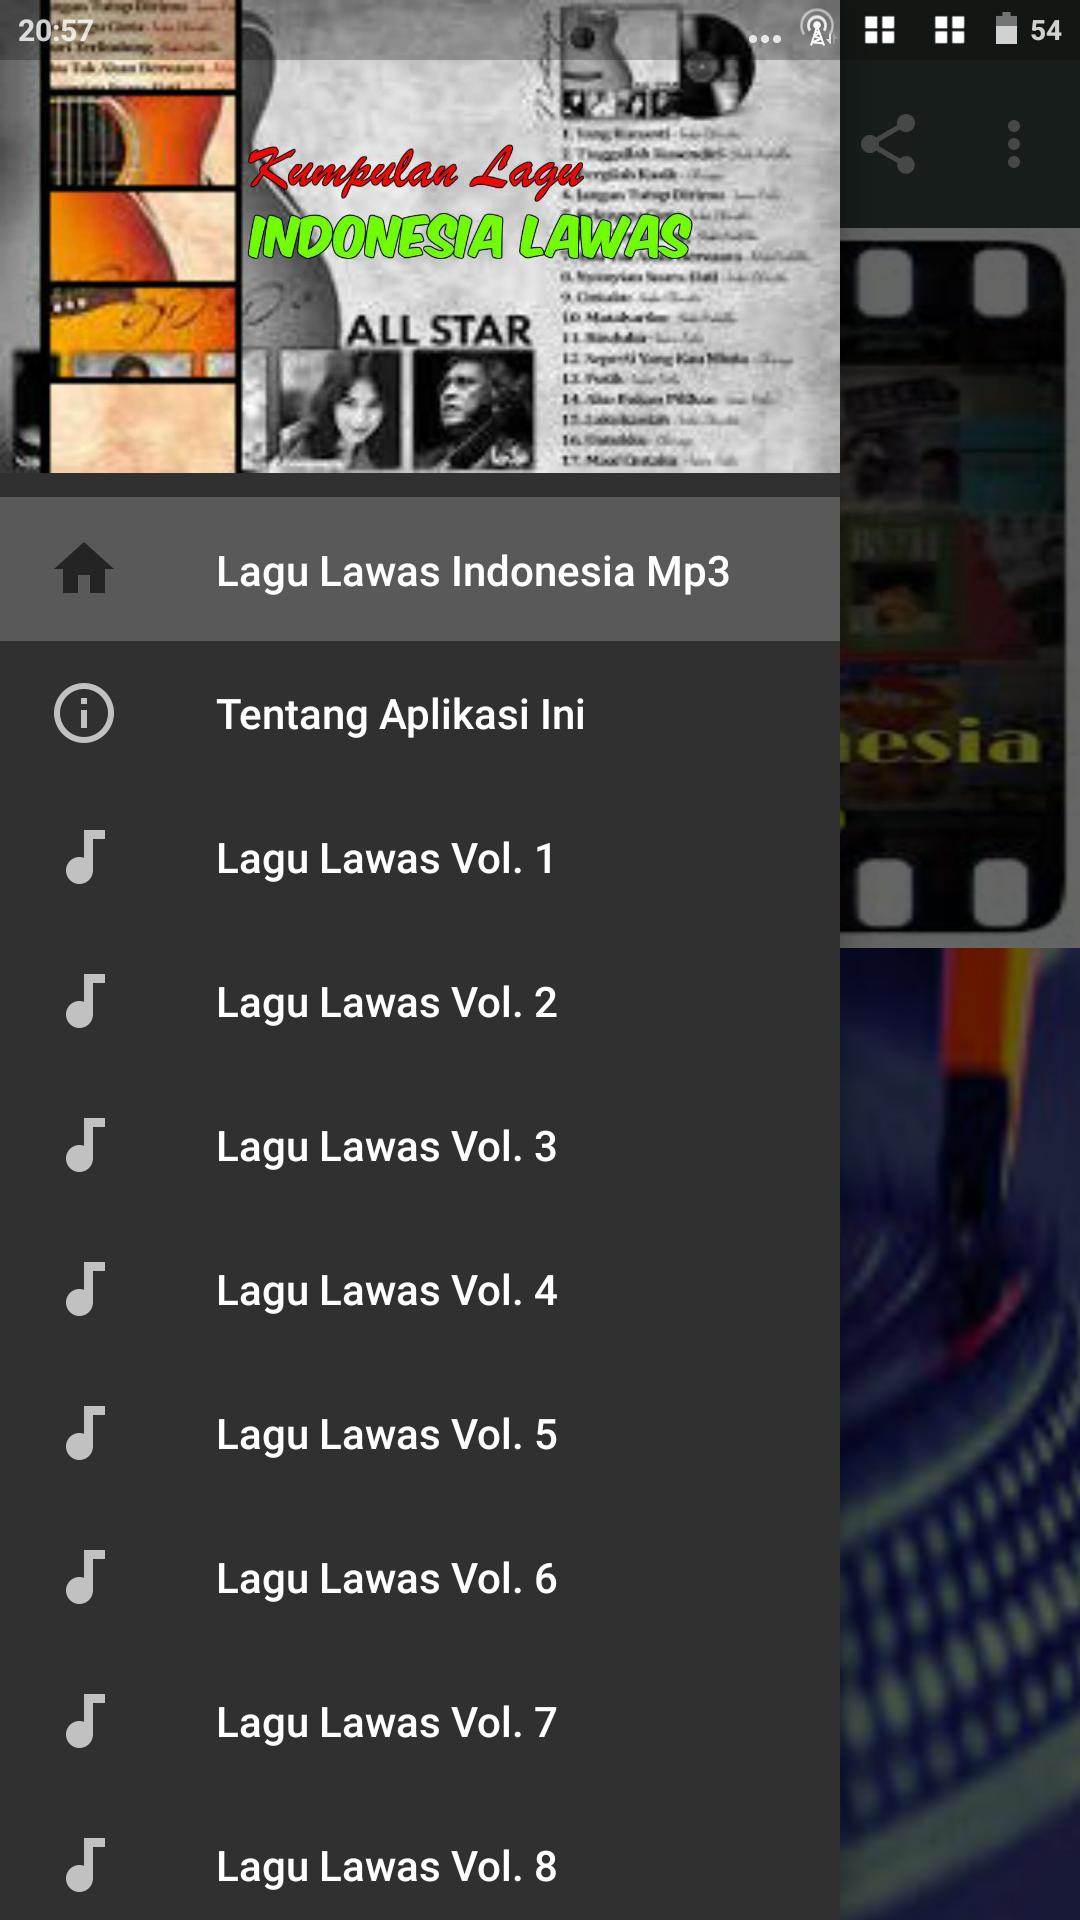 House Musik Lawas Mp3 : Lagu dangdut lawas "caca handika" full album mp3 - YouTube : Download lagu mp3 & video: